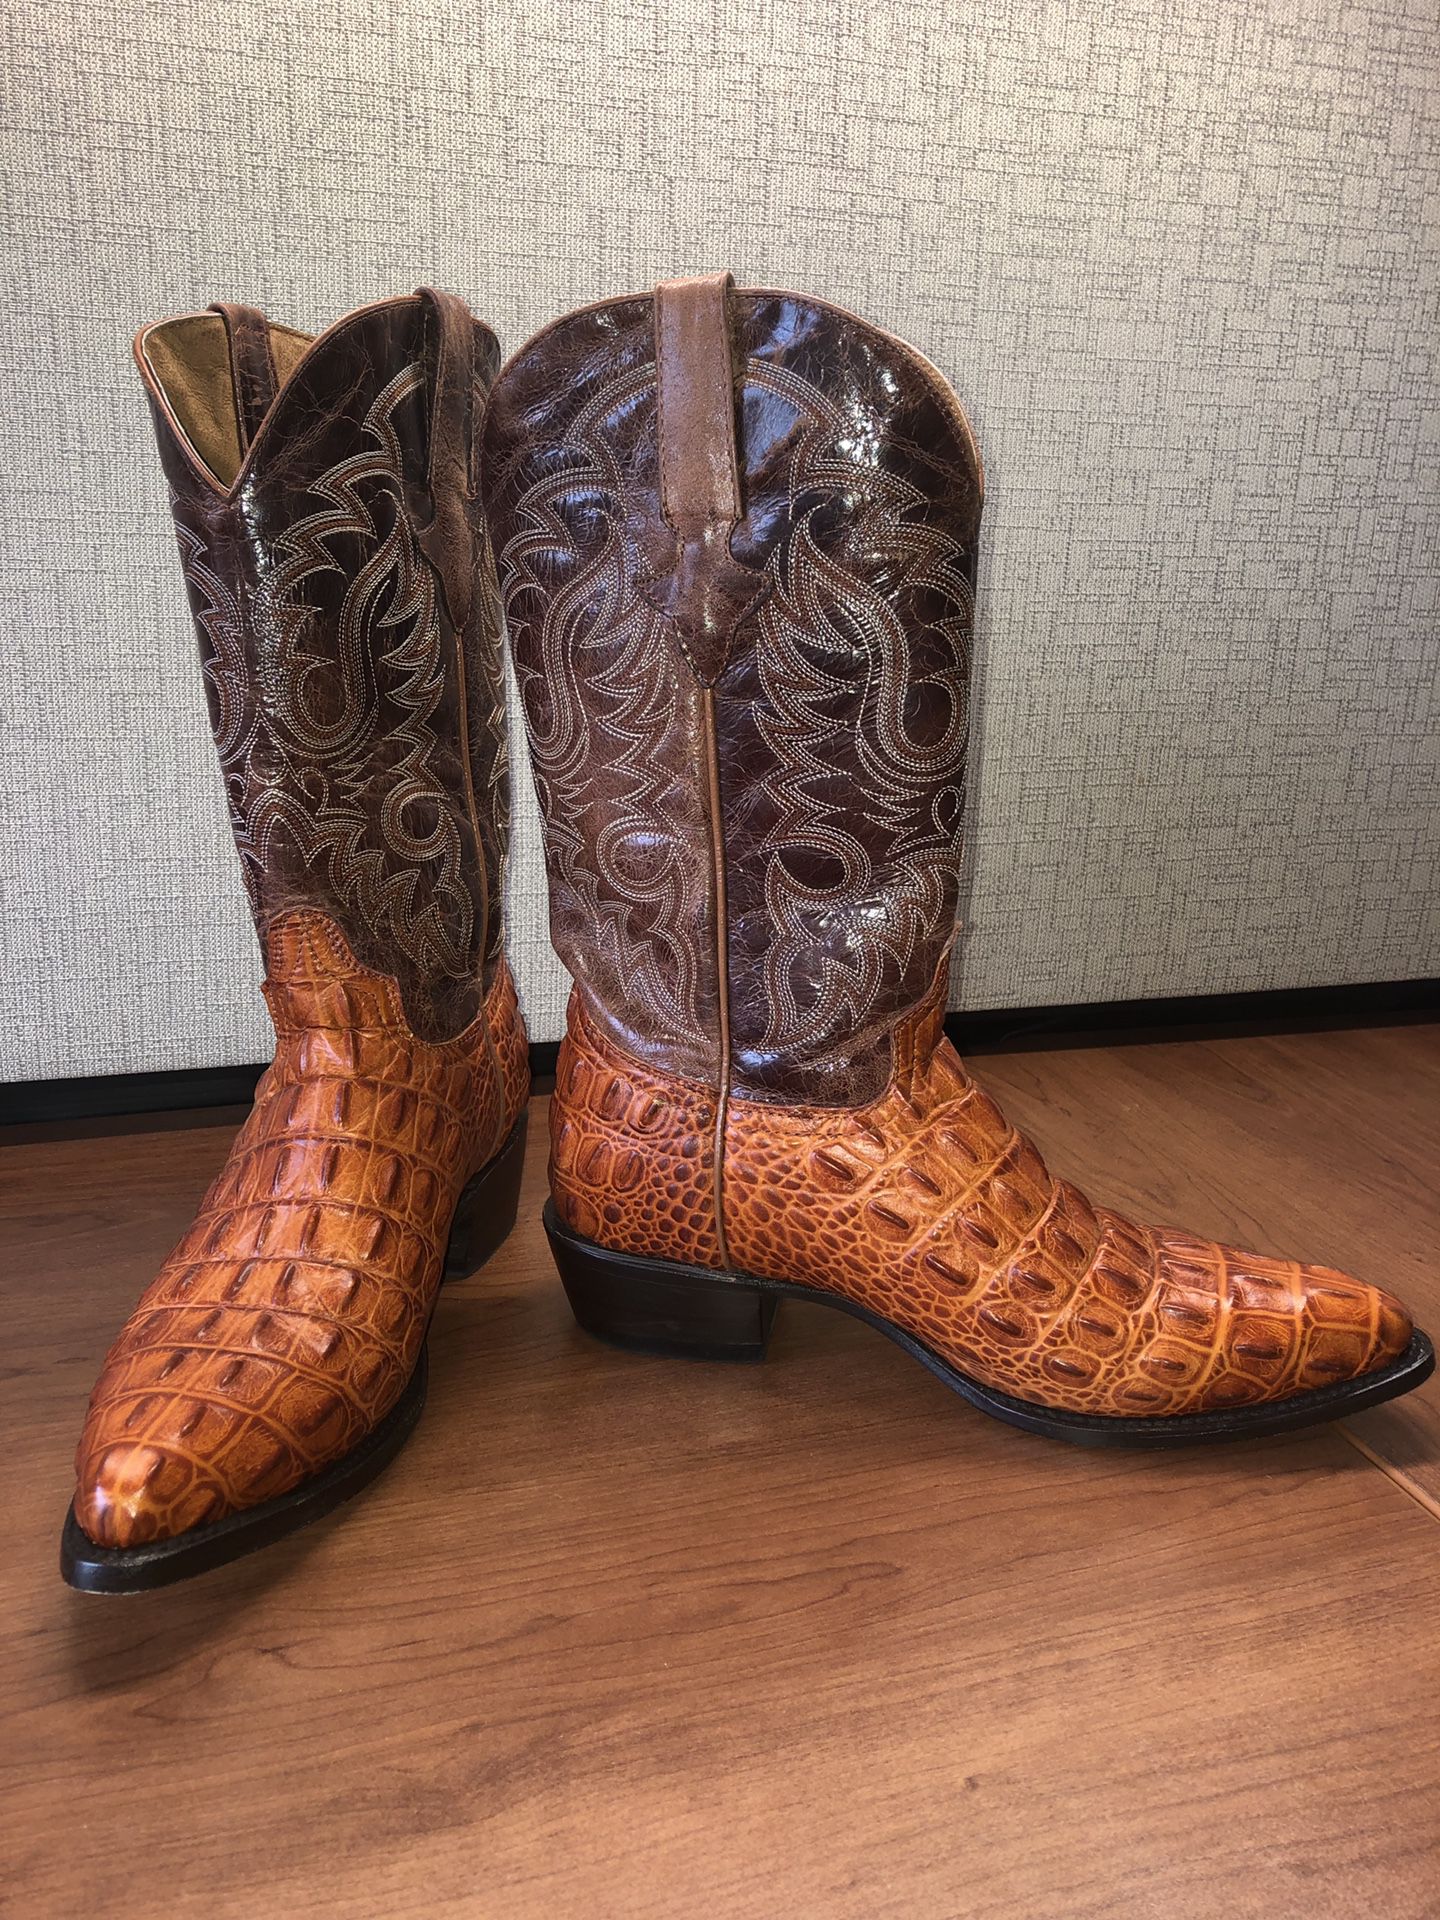 Cowboy boots 10 1/2 US size brand name Texas legacy 100% leather for sale $130. Botas Vaqueras marca Texas Legacy 10 1/2 talla, cuero 100% real a la